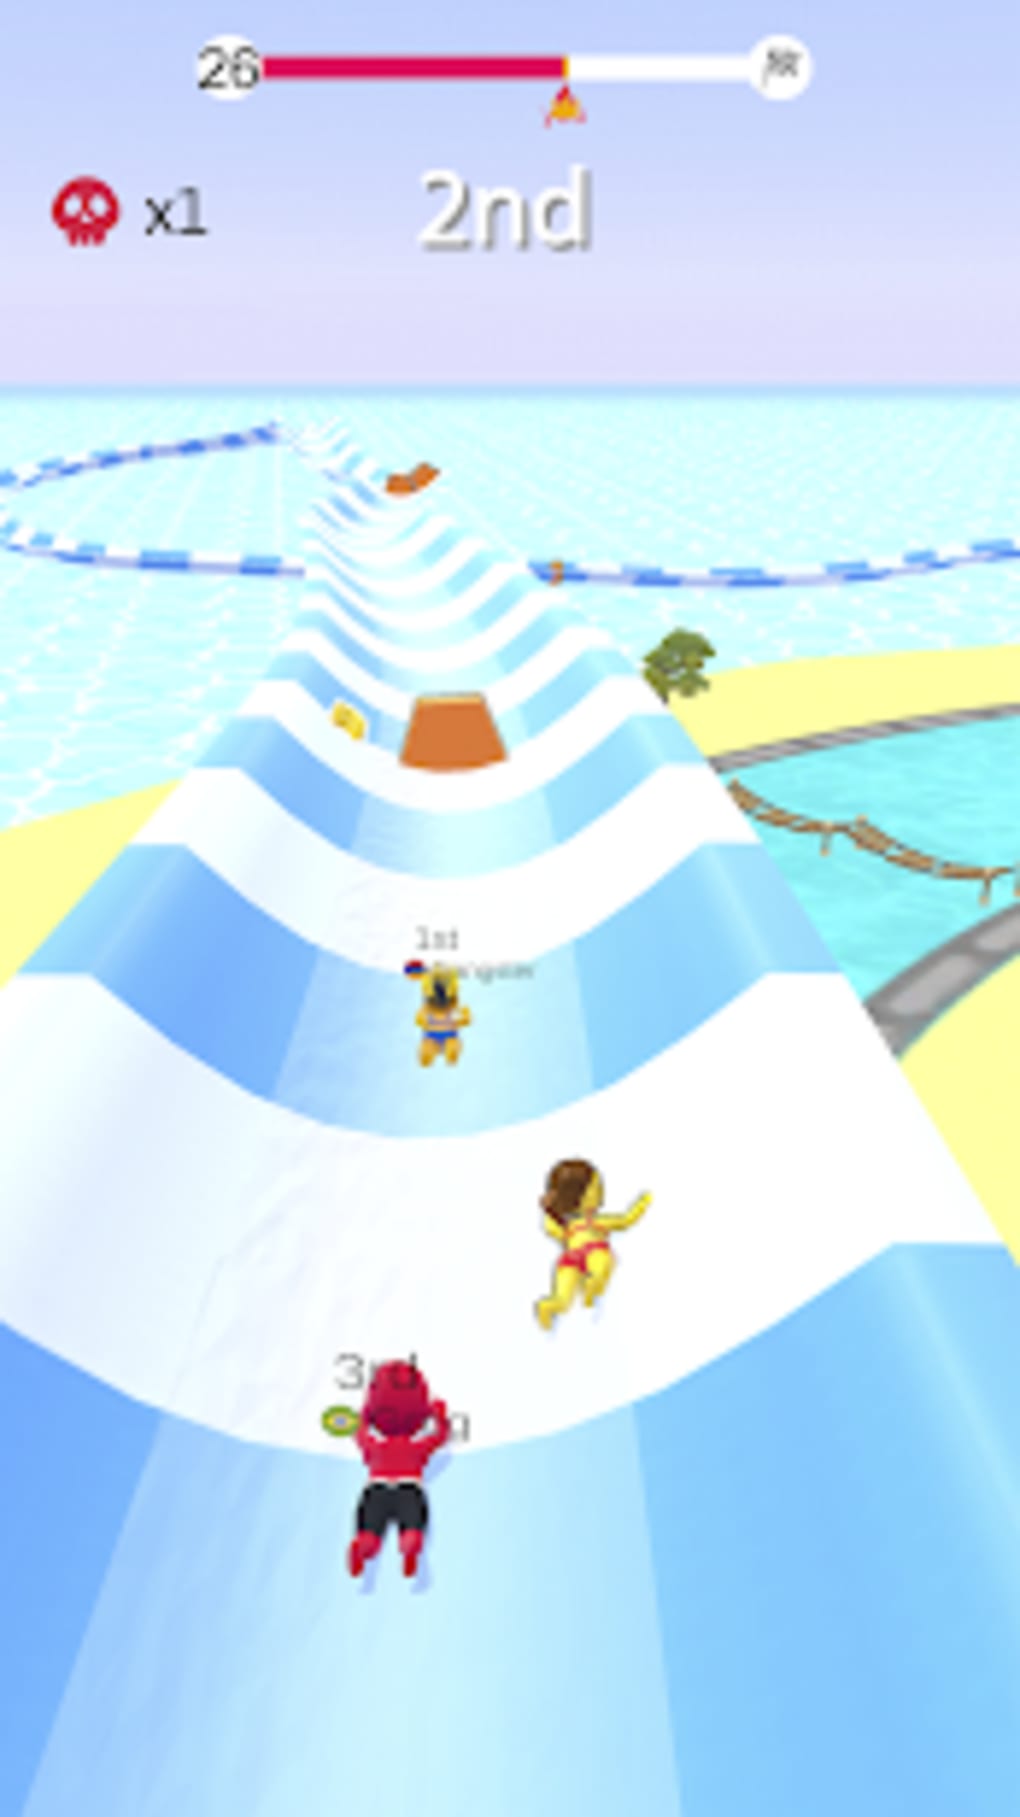 Aquapark IO - Play for free - Online Games